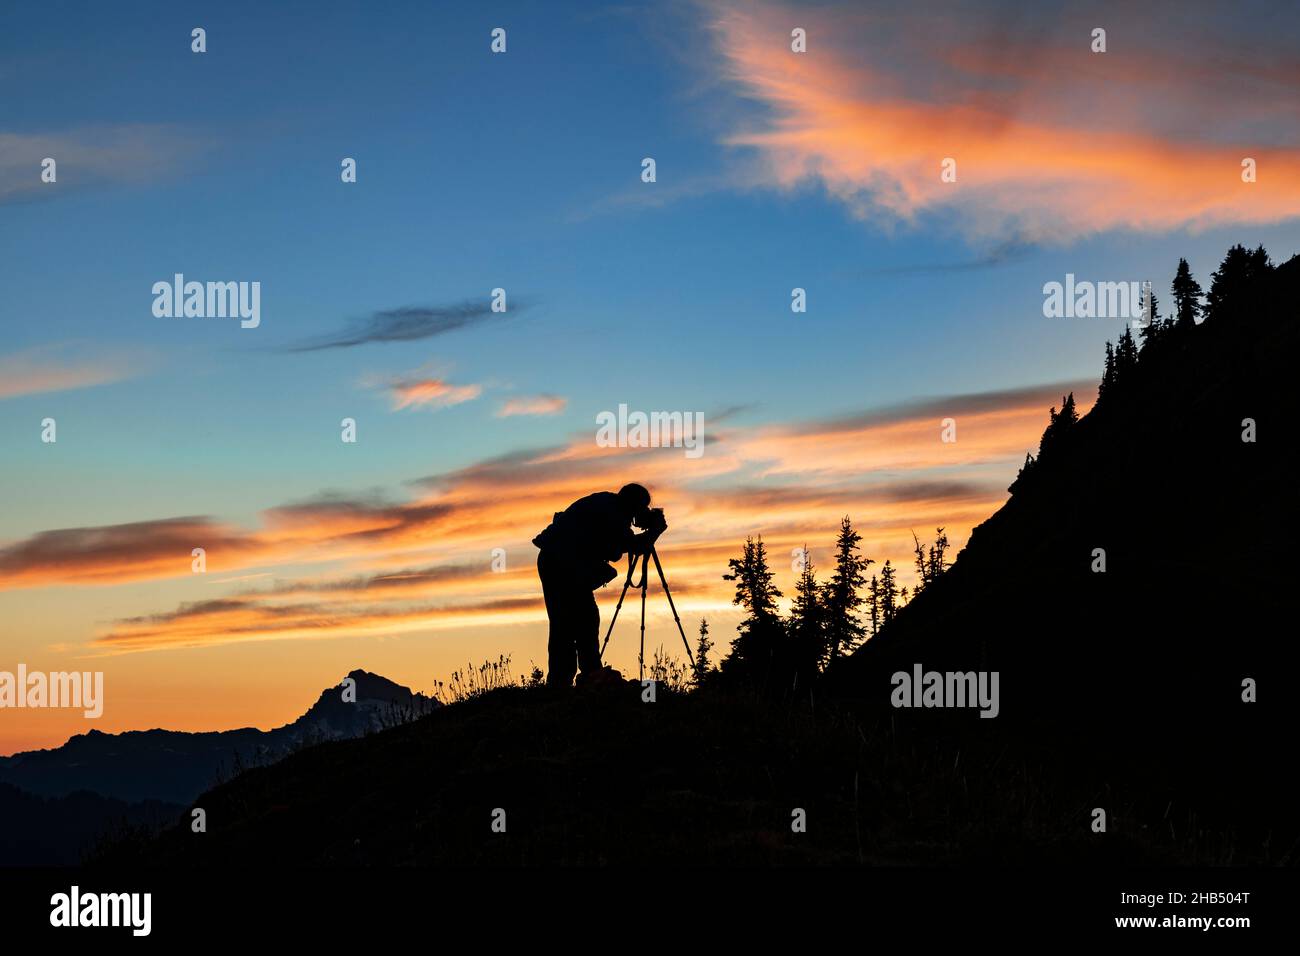 WA20515-00....WASHINGTON - Vicky Spring Mount Baker Snoqualmie Nati fotografiert den Sonnenuntergang entlang des Pacific Crest Trail in der Glacier Peak Wilderness Stockfoto